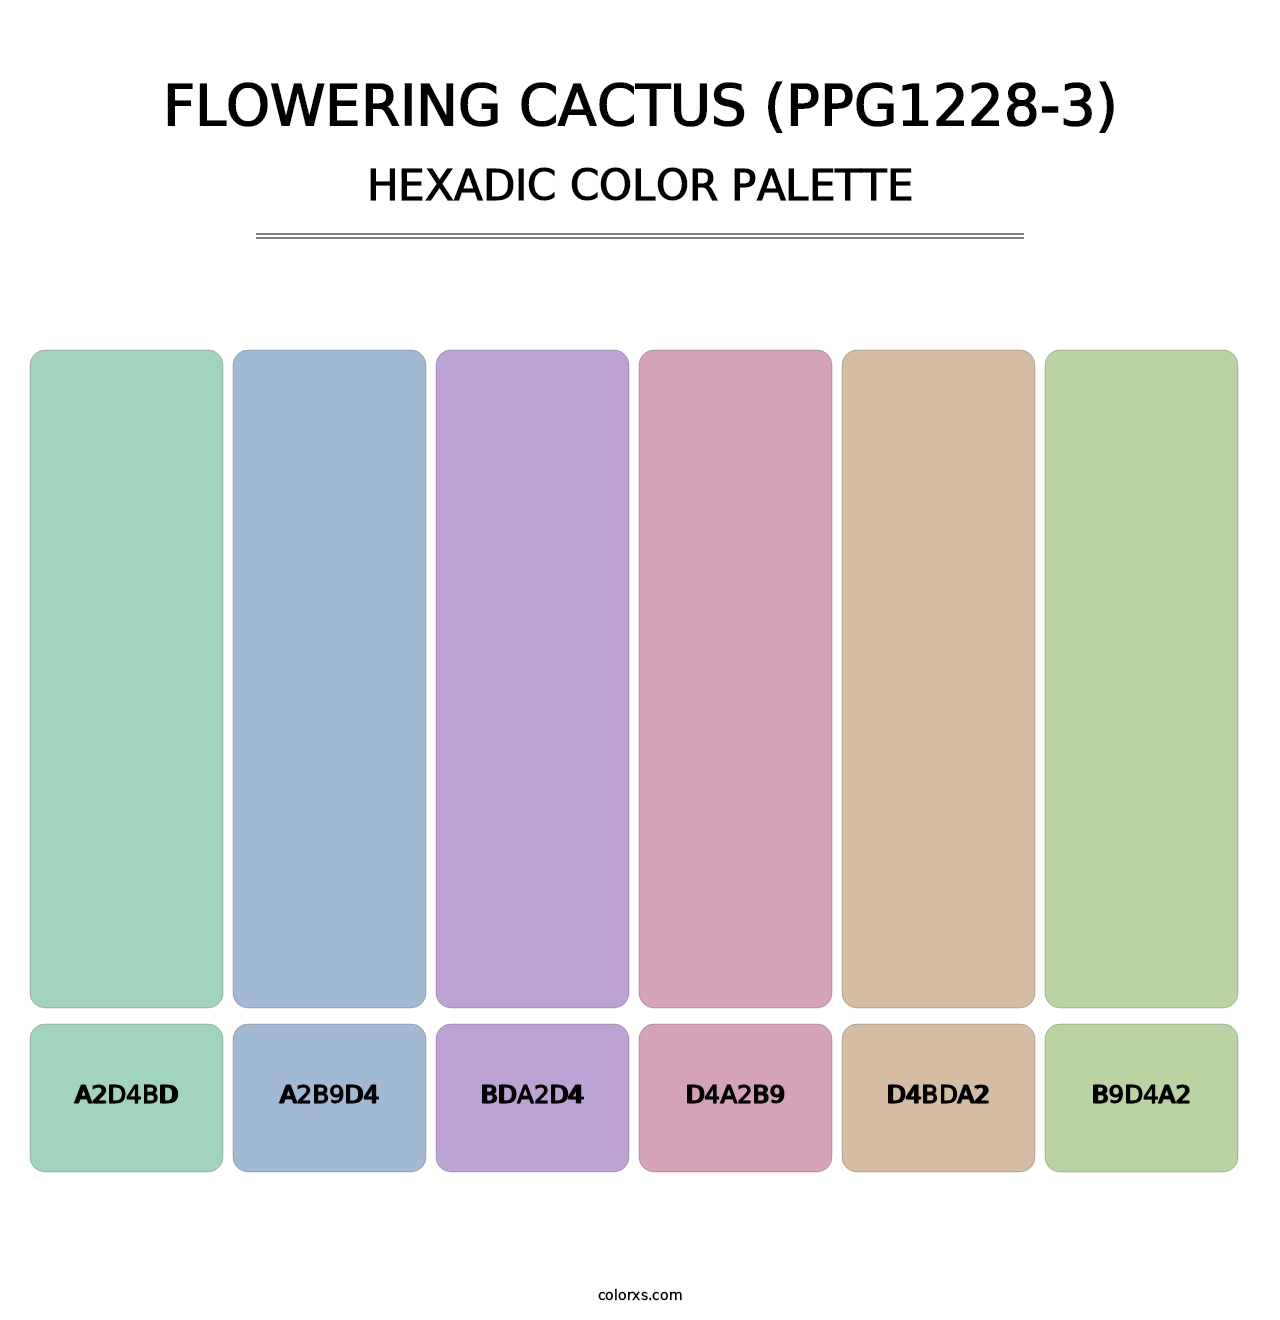 Flowering Cactus (PPG1228-3) - Hexadic Color Palette